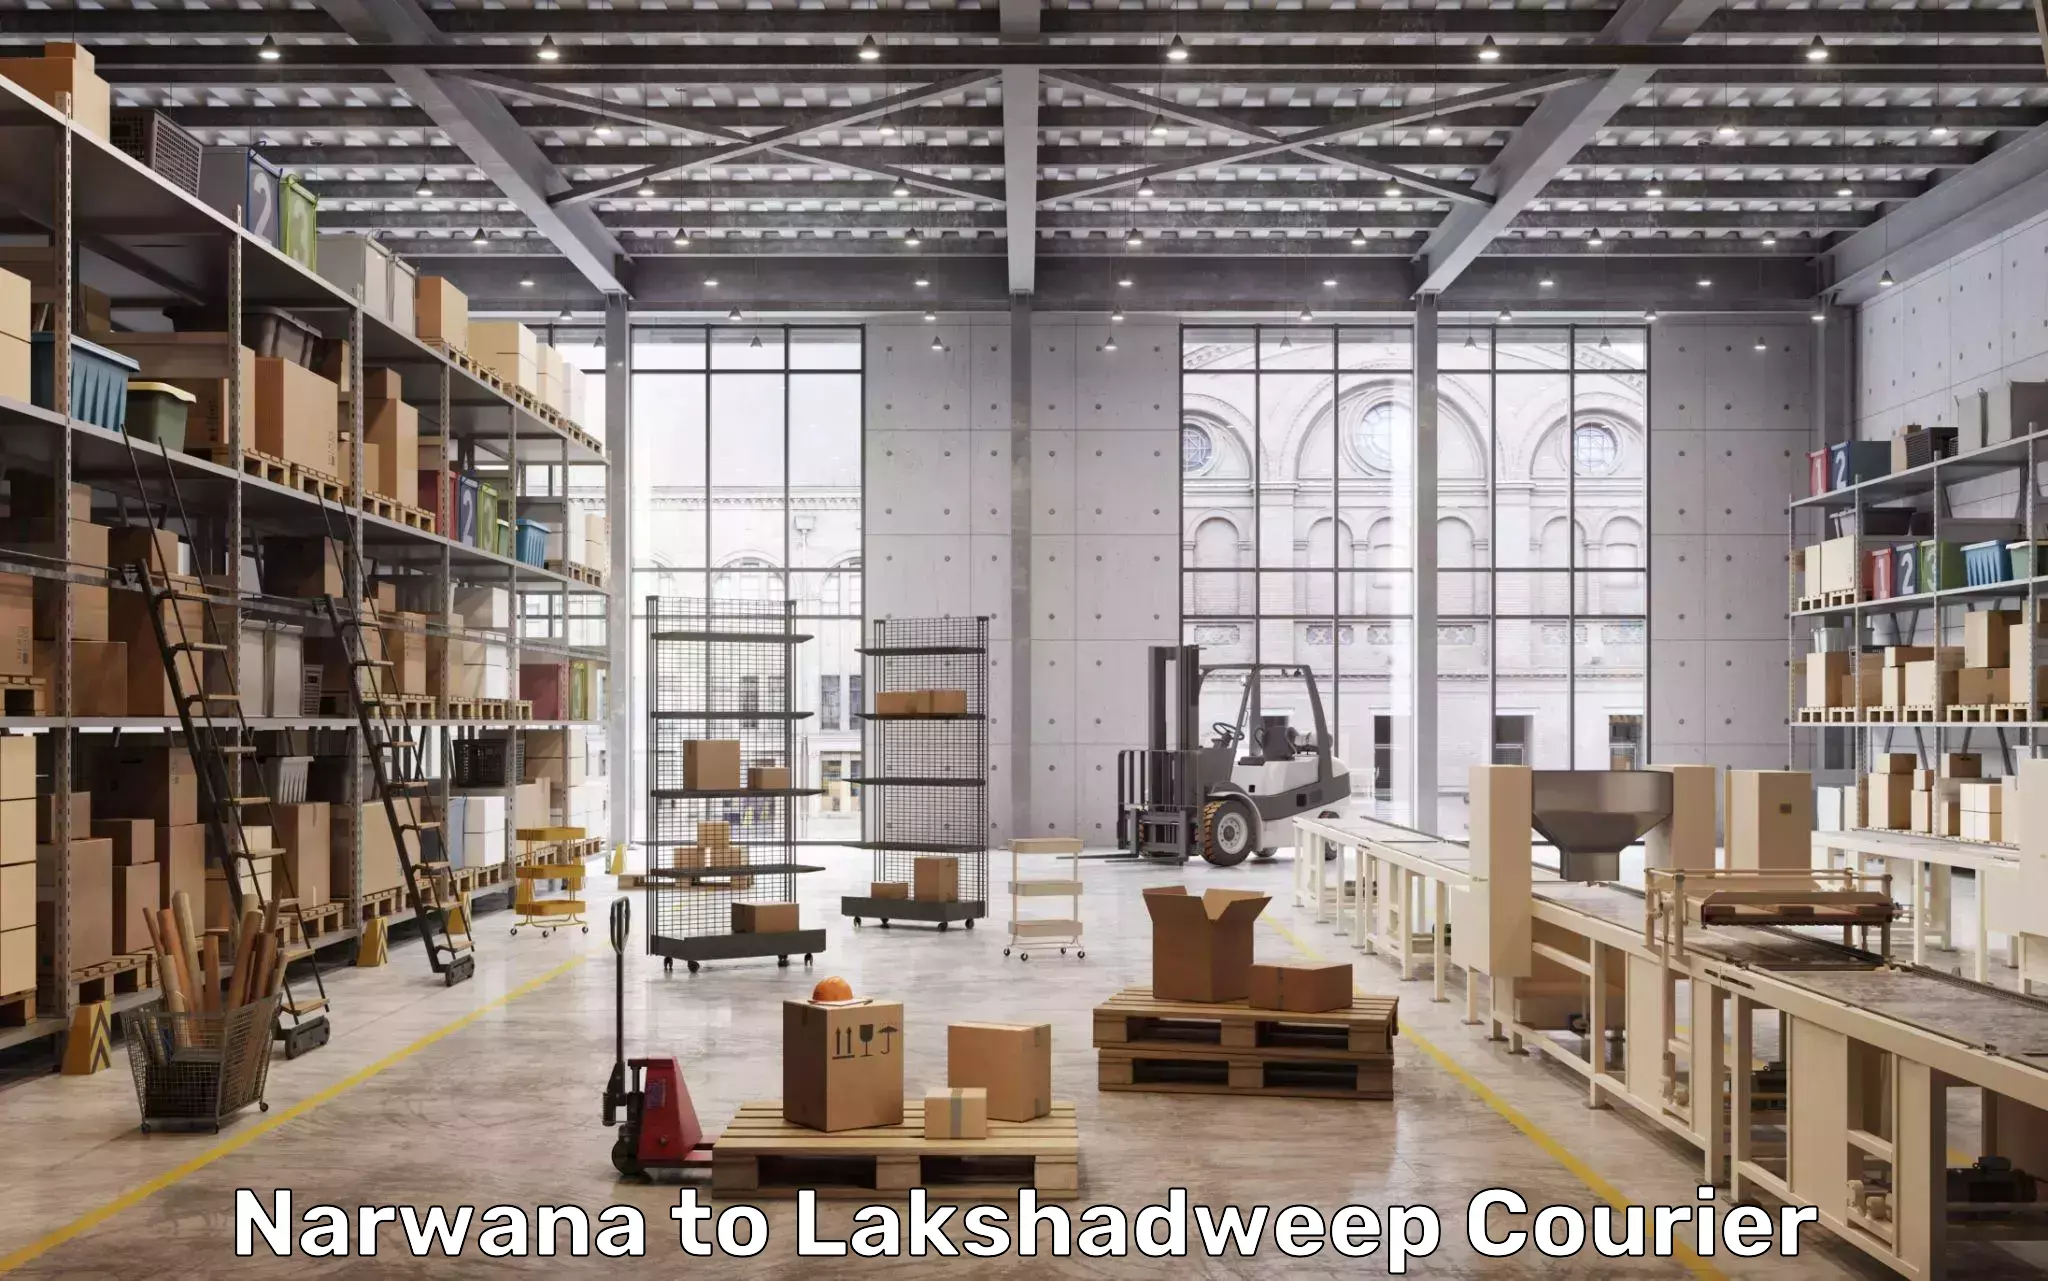 Luggage transport consultancy Narwana to Lakshadweep